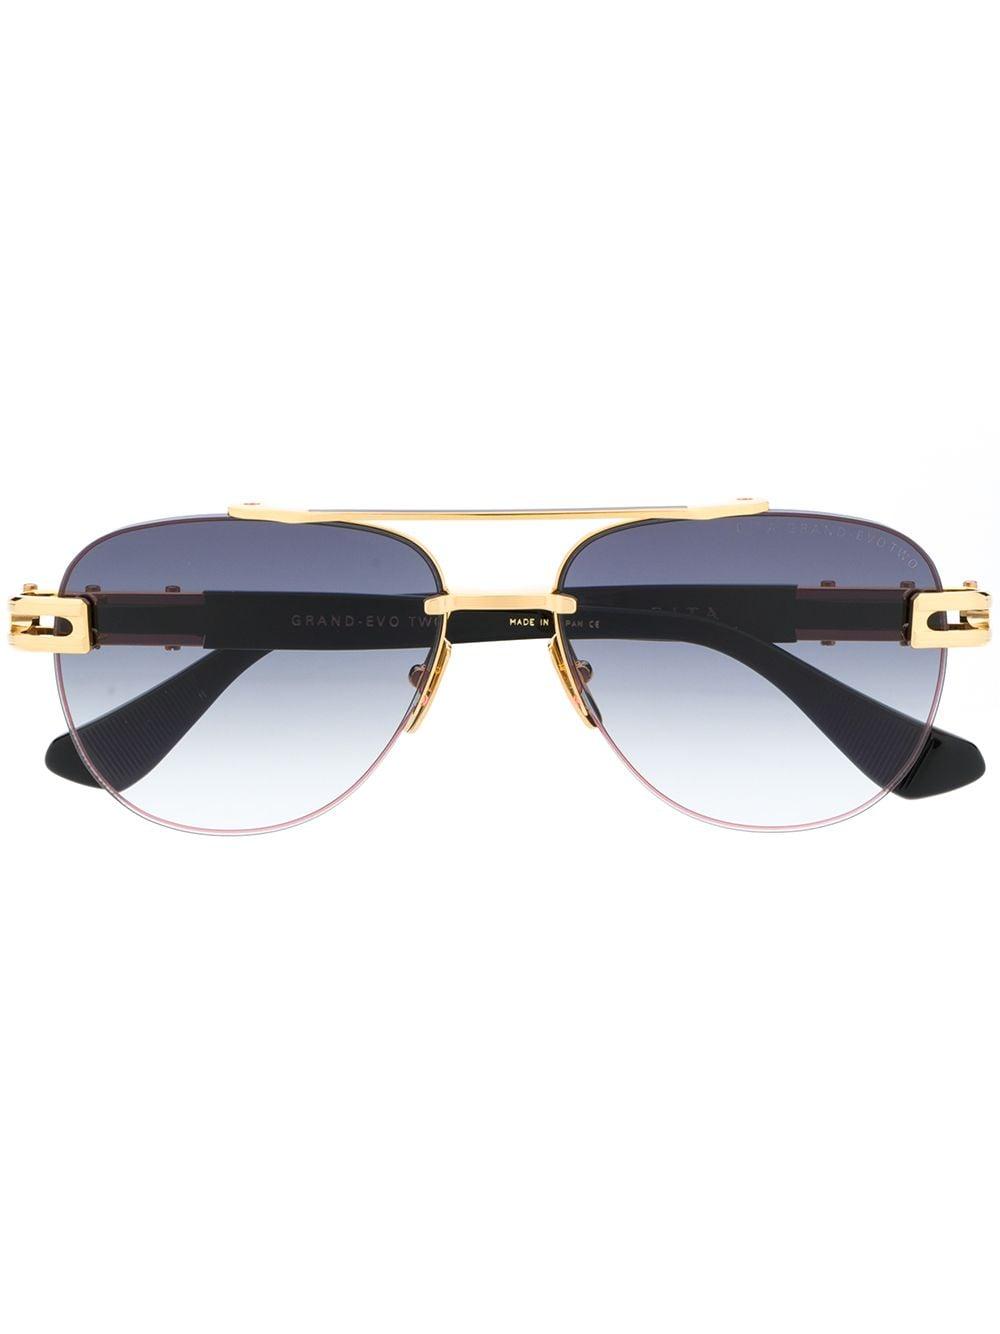 Dita Eyewear Grand Evo Two Sunglasses in Black - Lyst